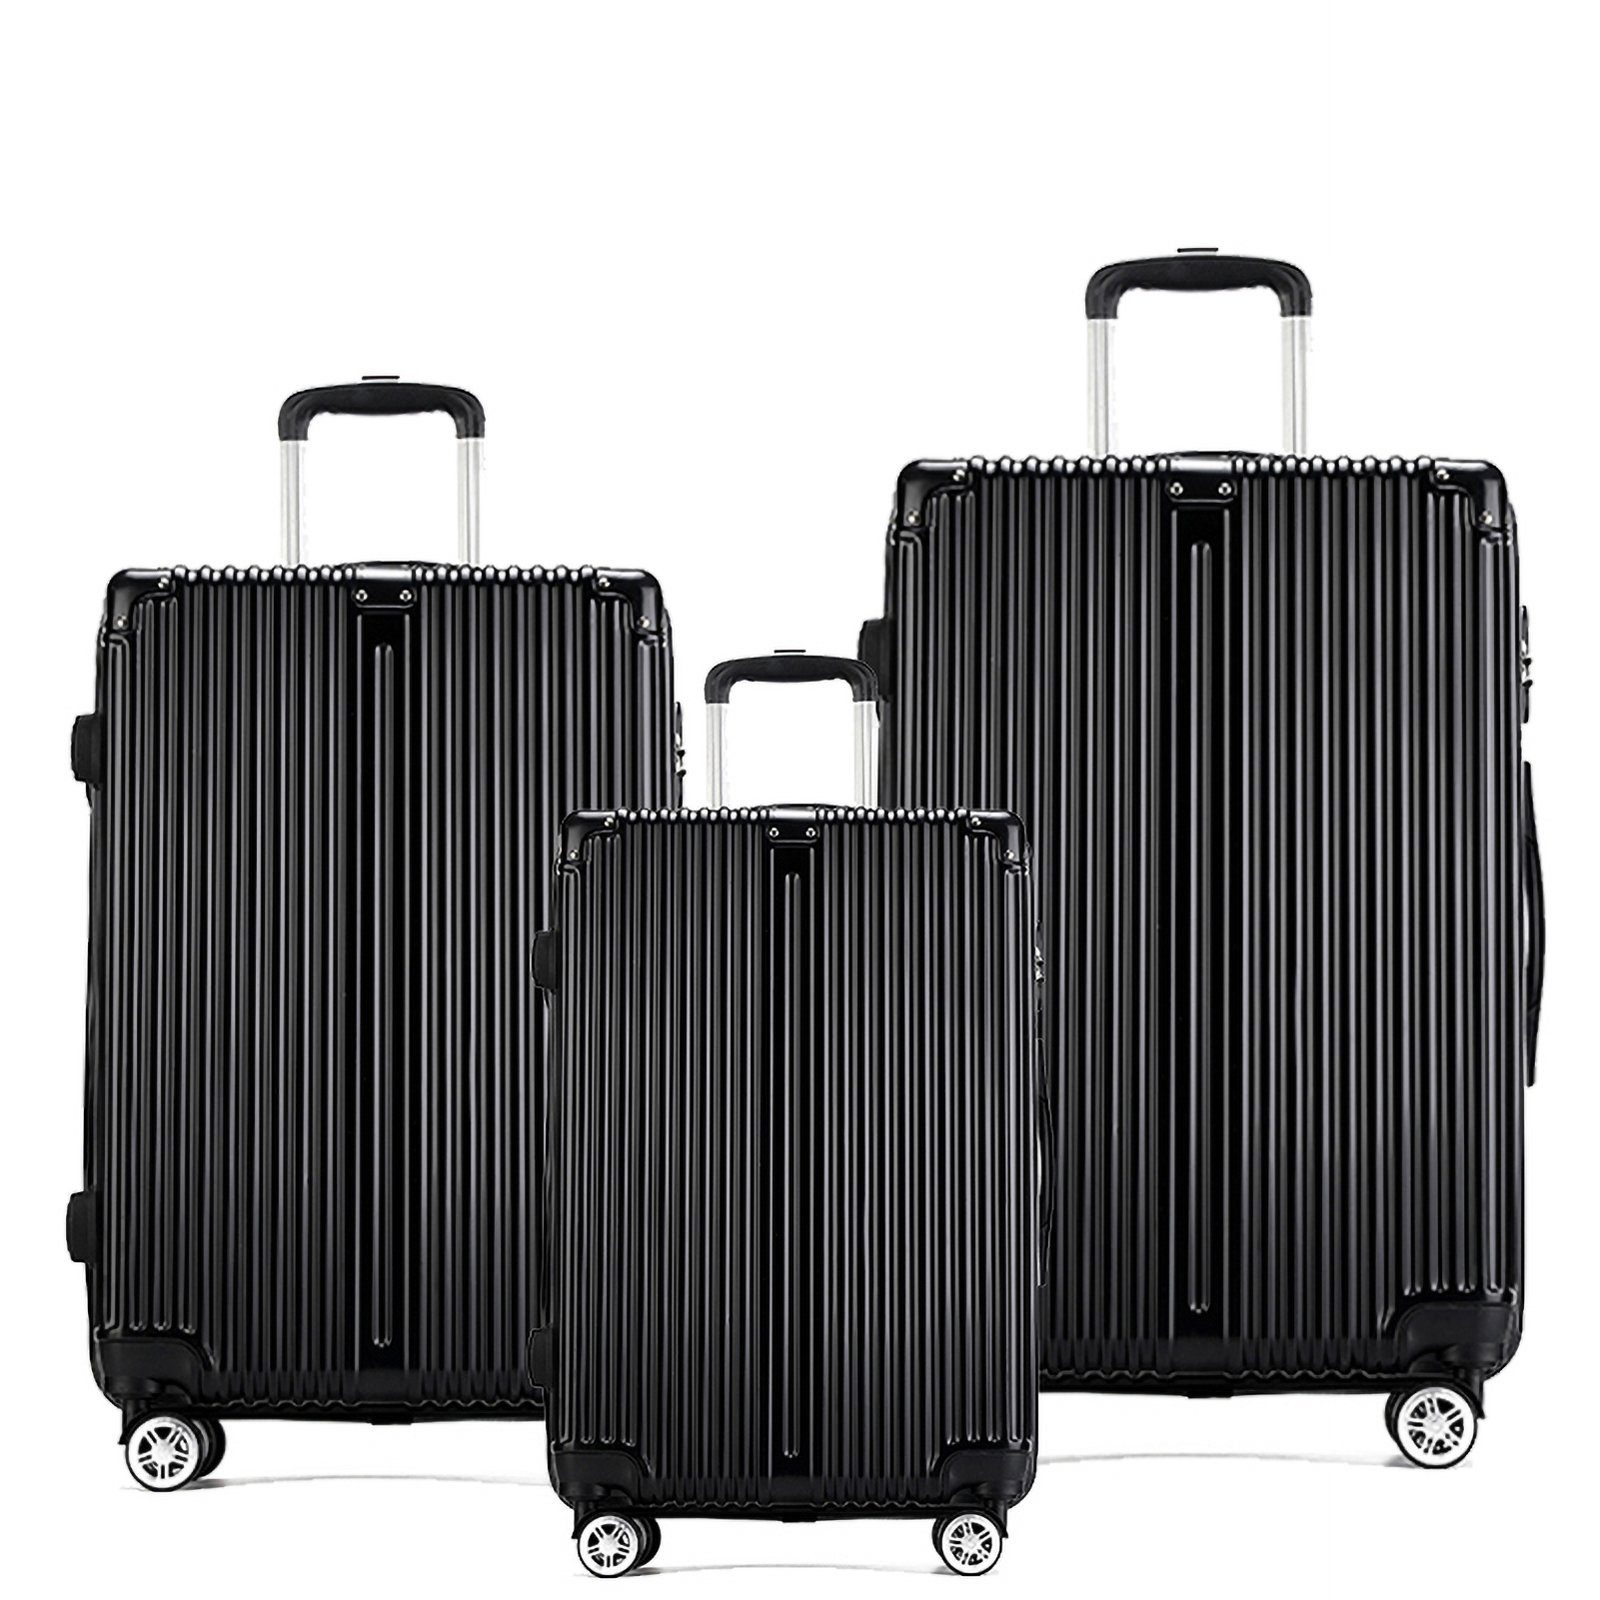 FUROKOY Kofferset 3-teiliges Set, Hartschalen-Handgepäck ABS-Material, , Rollkoffer, Reisekoffer mit Zahlenschloss schwarz stil 2